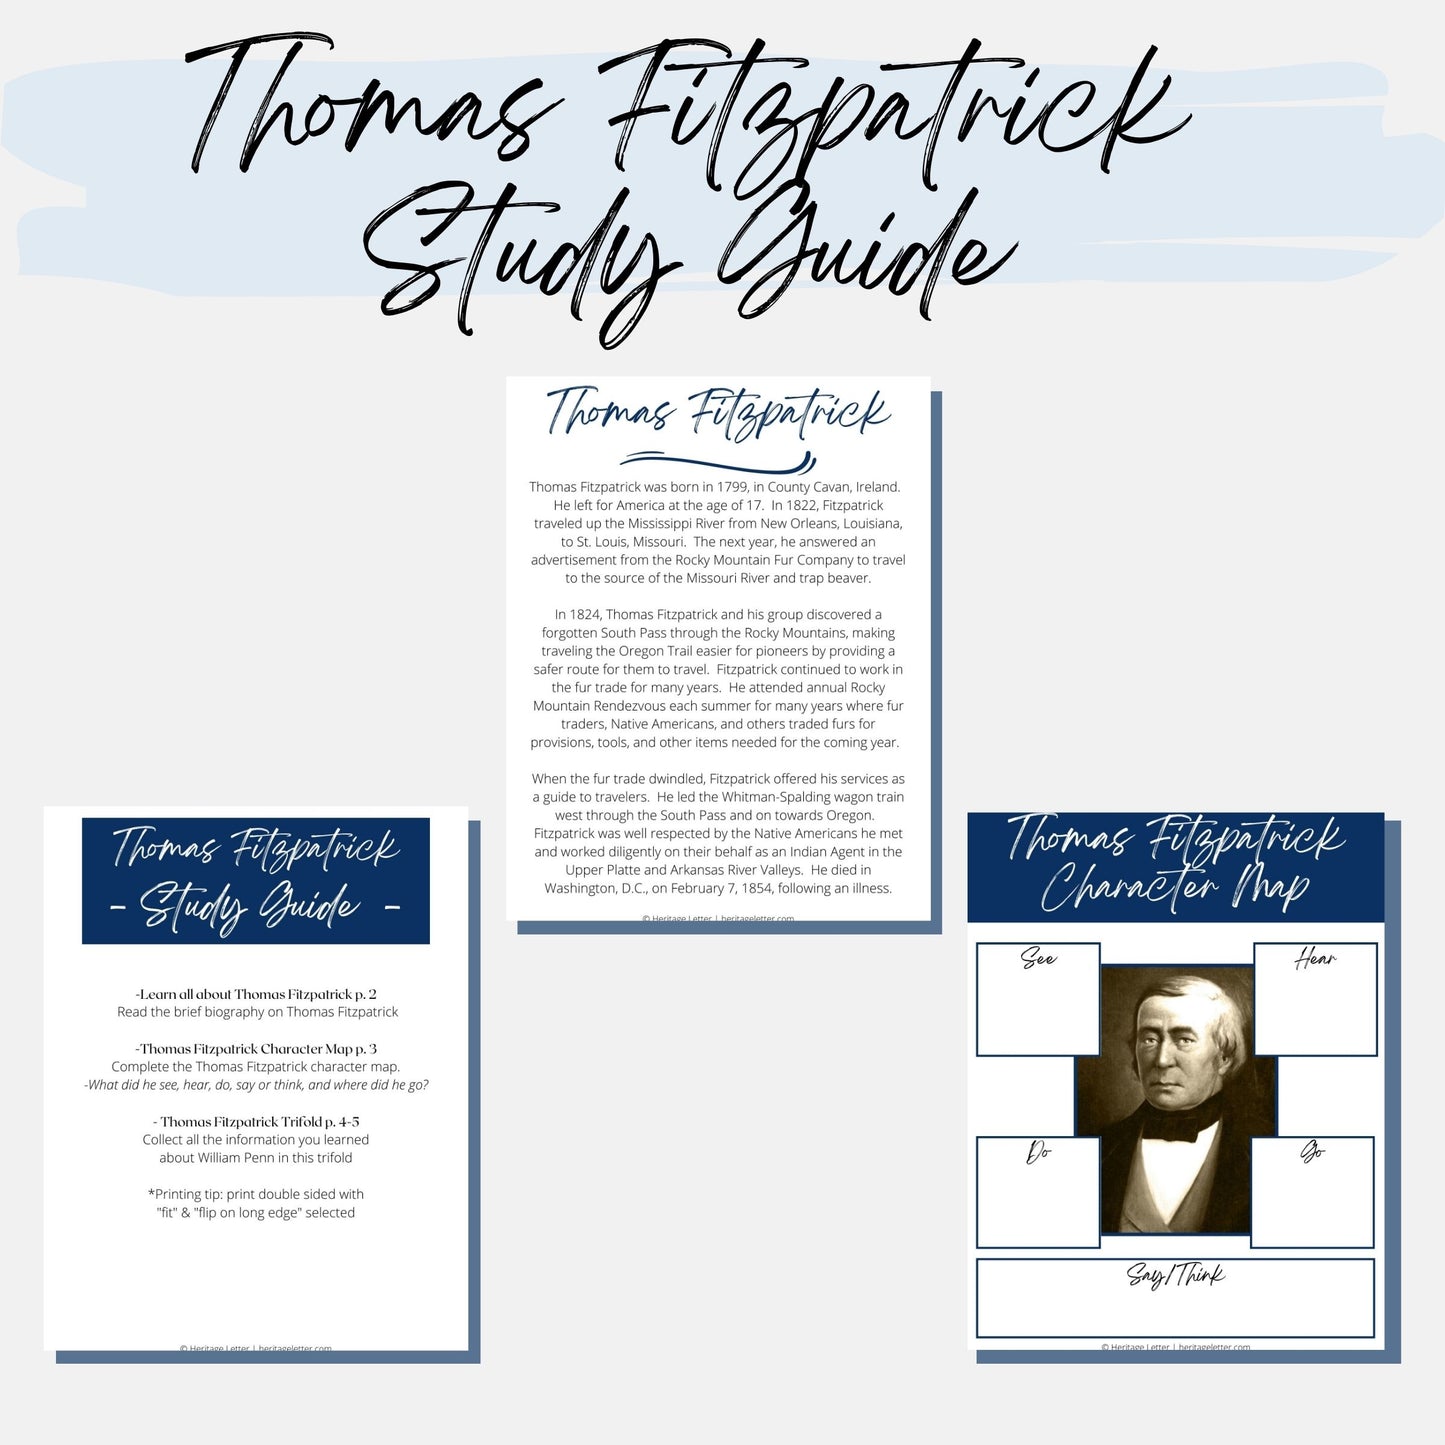 Thomas Fitzpatrick Study Guide